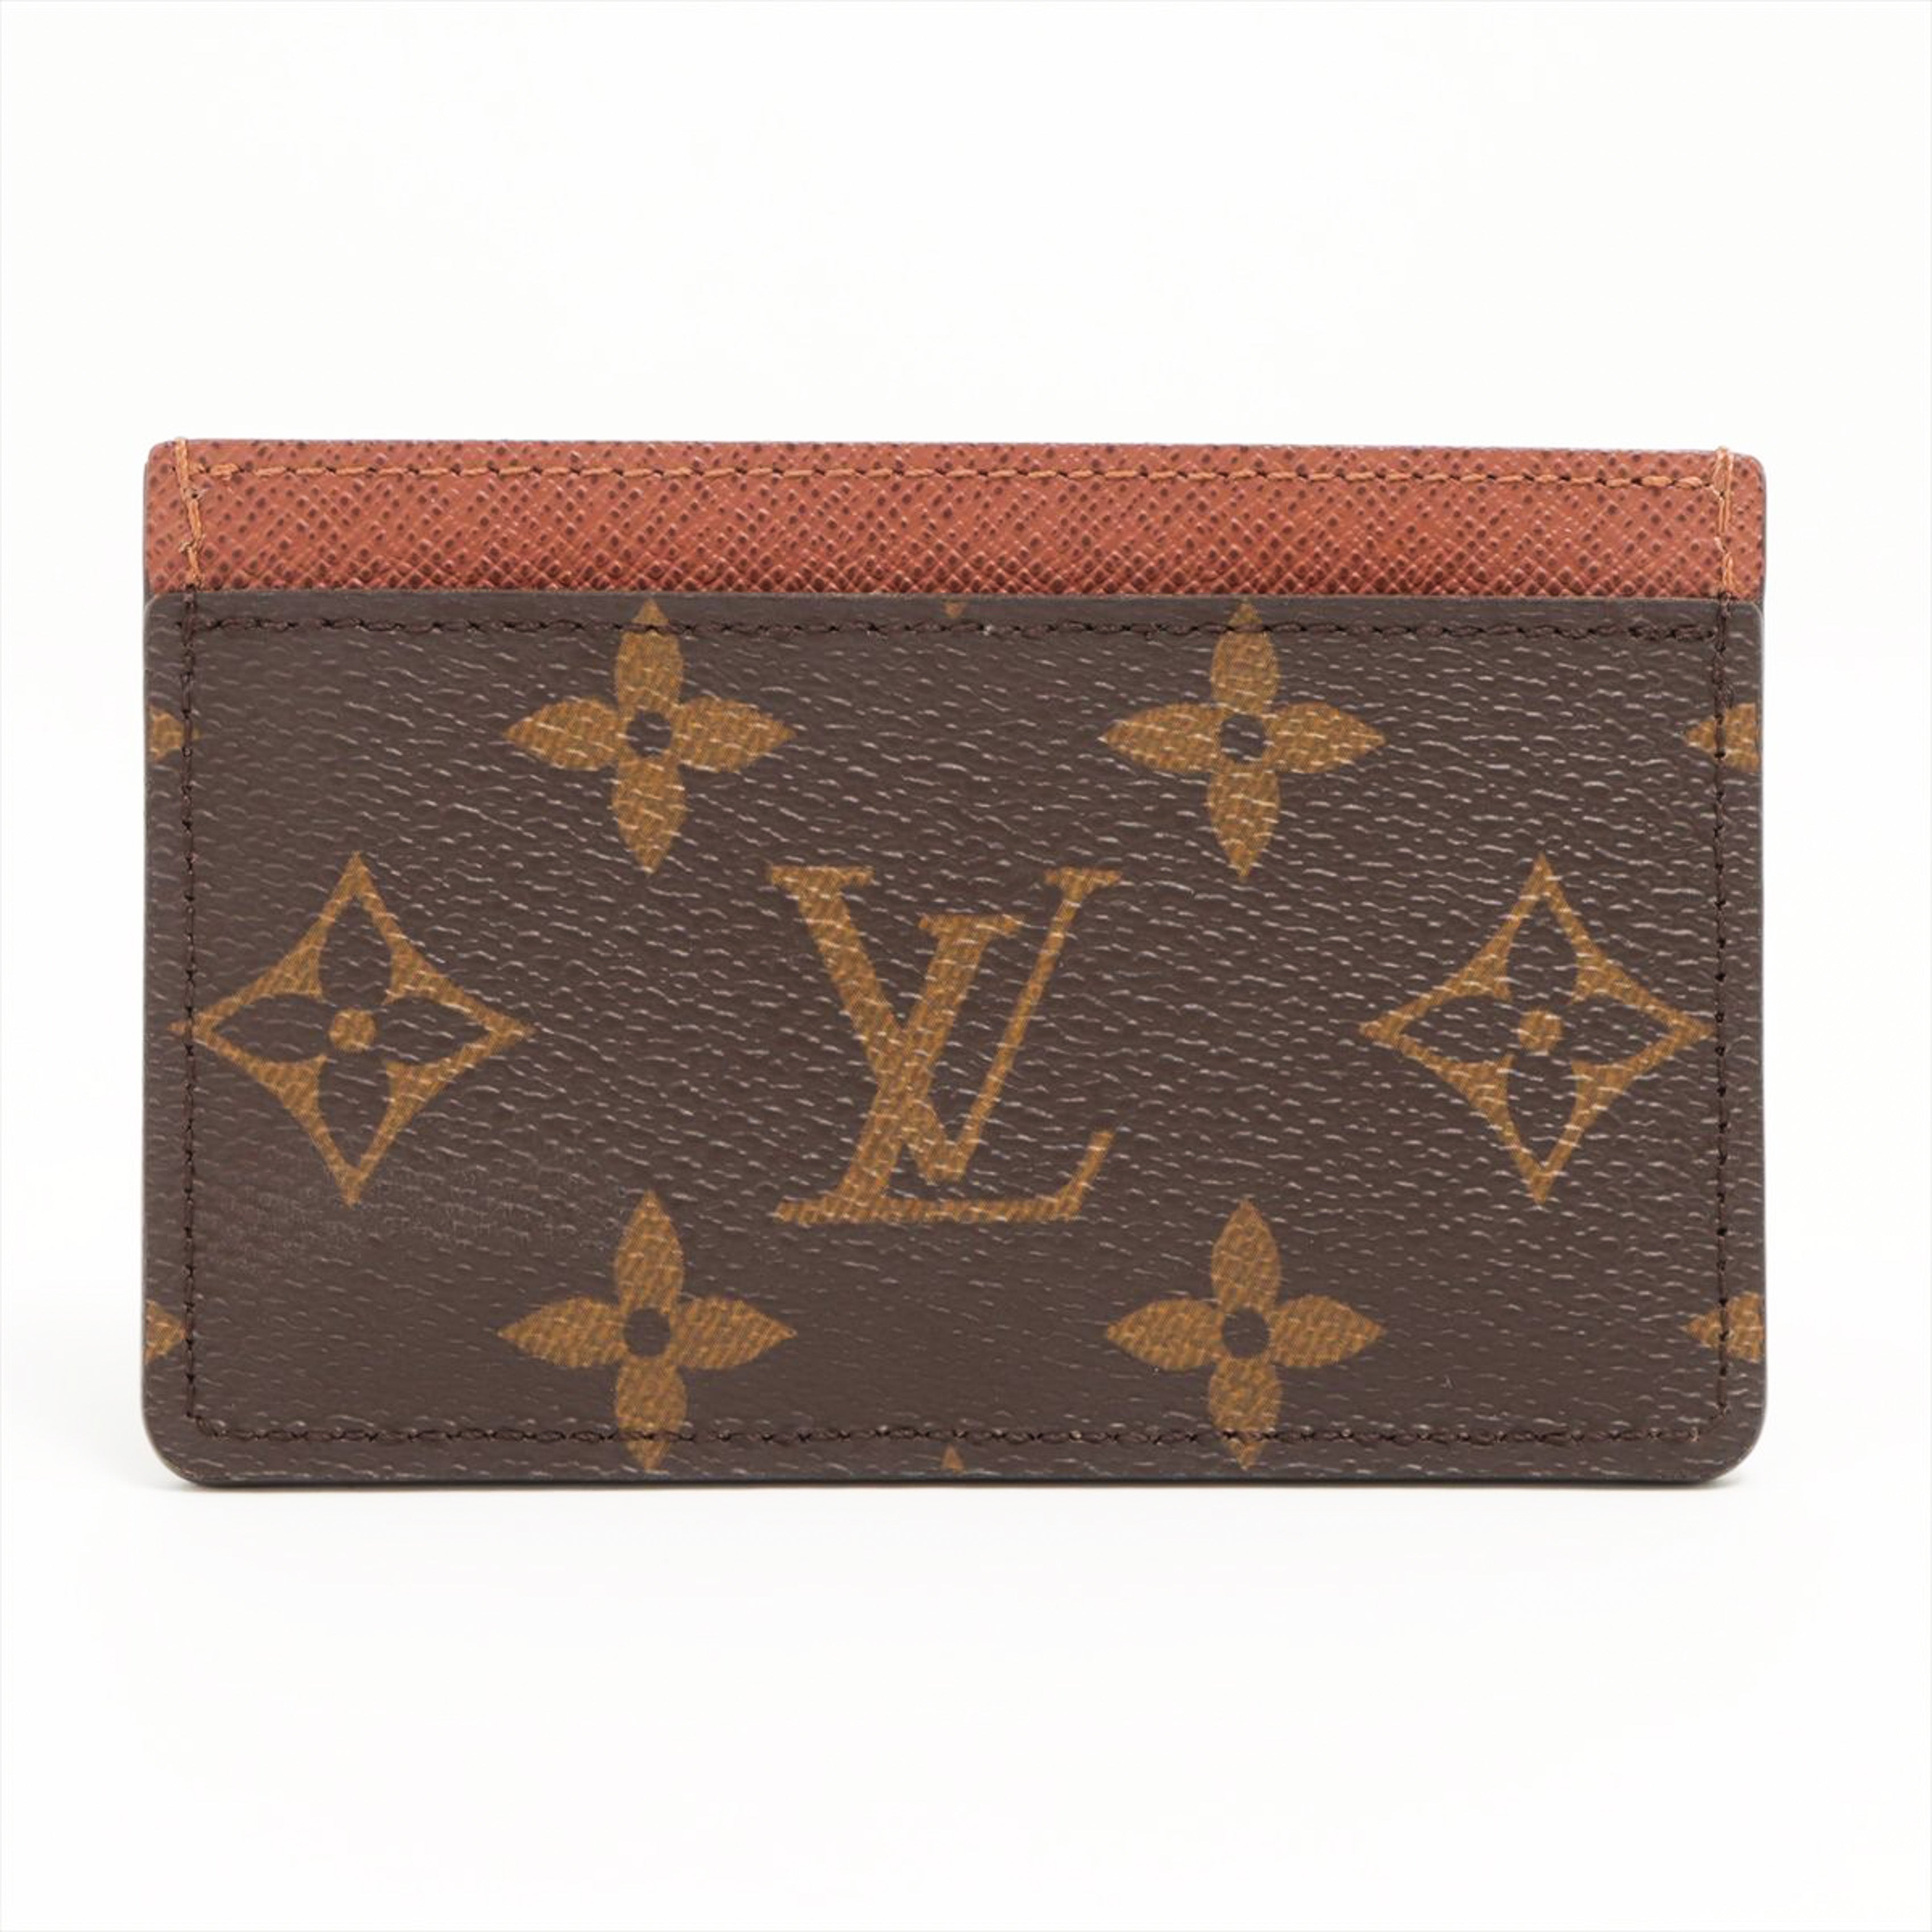 LOUIS VUITTON Louis Vuitton Monogram Card Holder - Vault 55